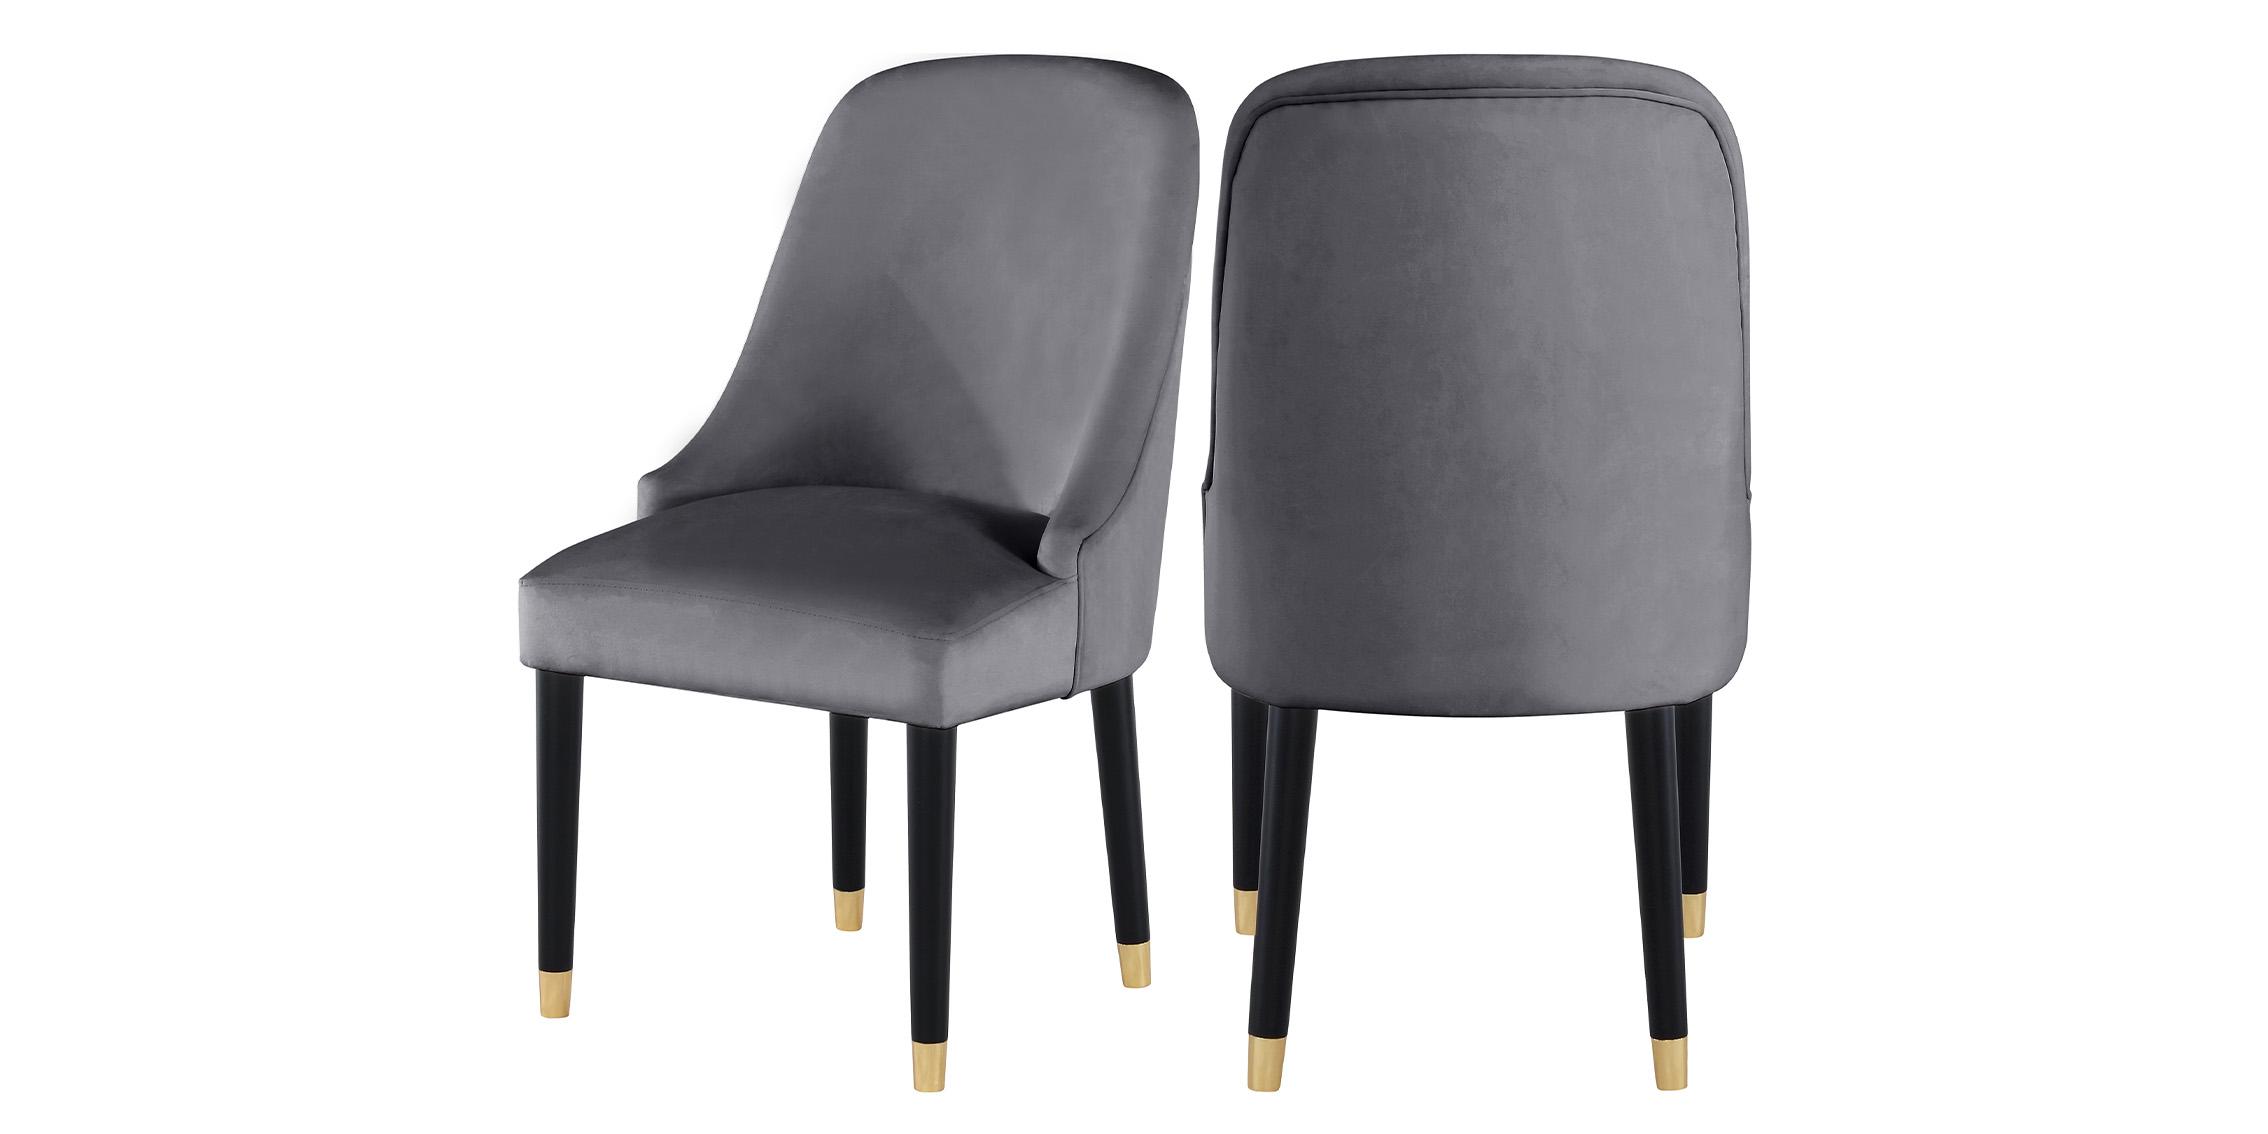 Contemporary, Modern Dining Chair Set OMNI 923Grey-C 923Grey-C in Gray Velvet